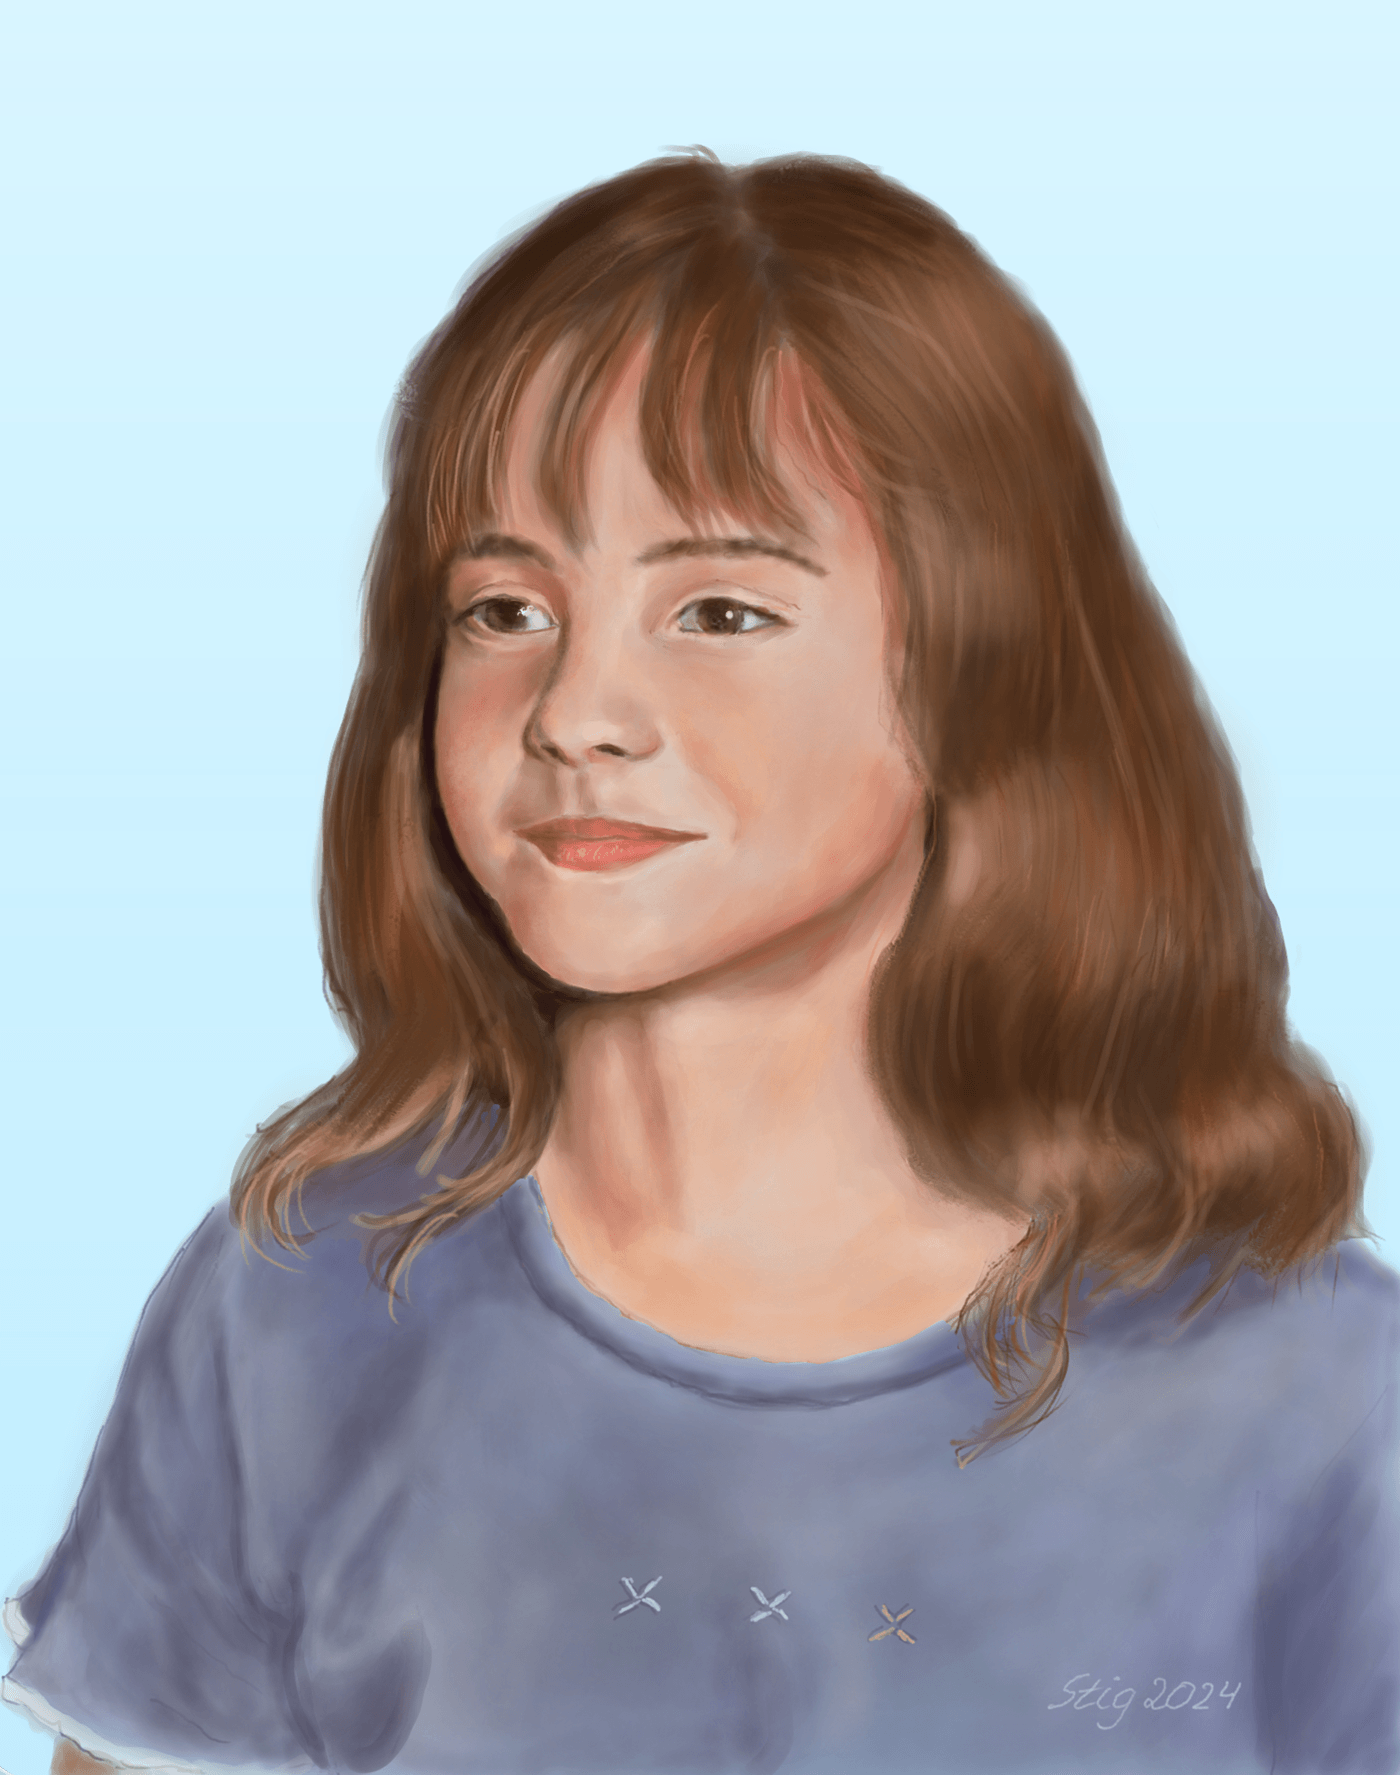 digital painting portrait girl